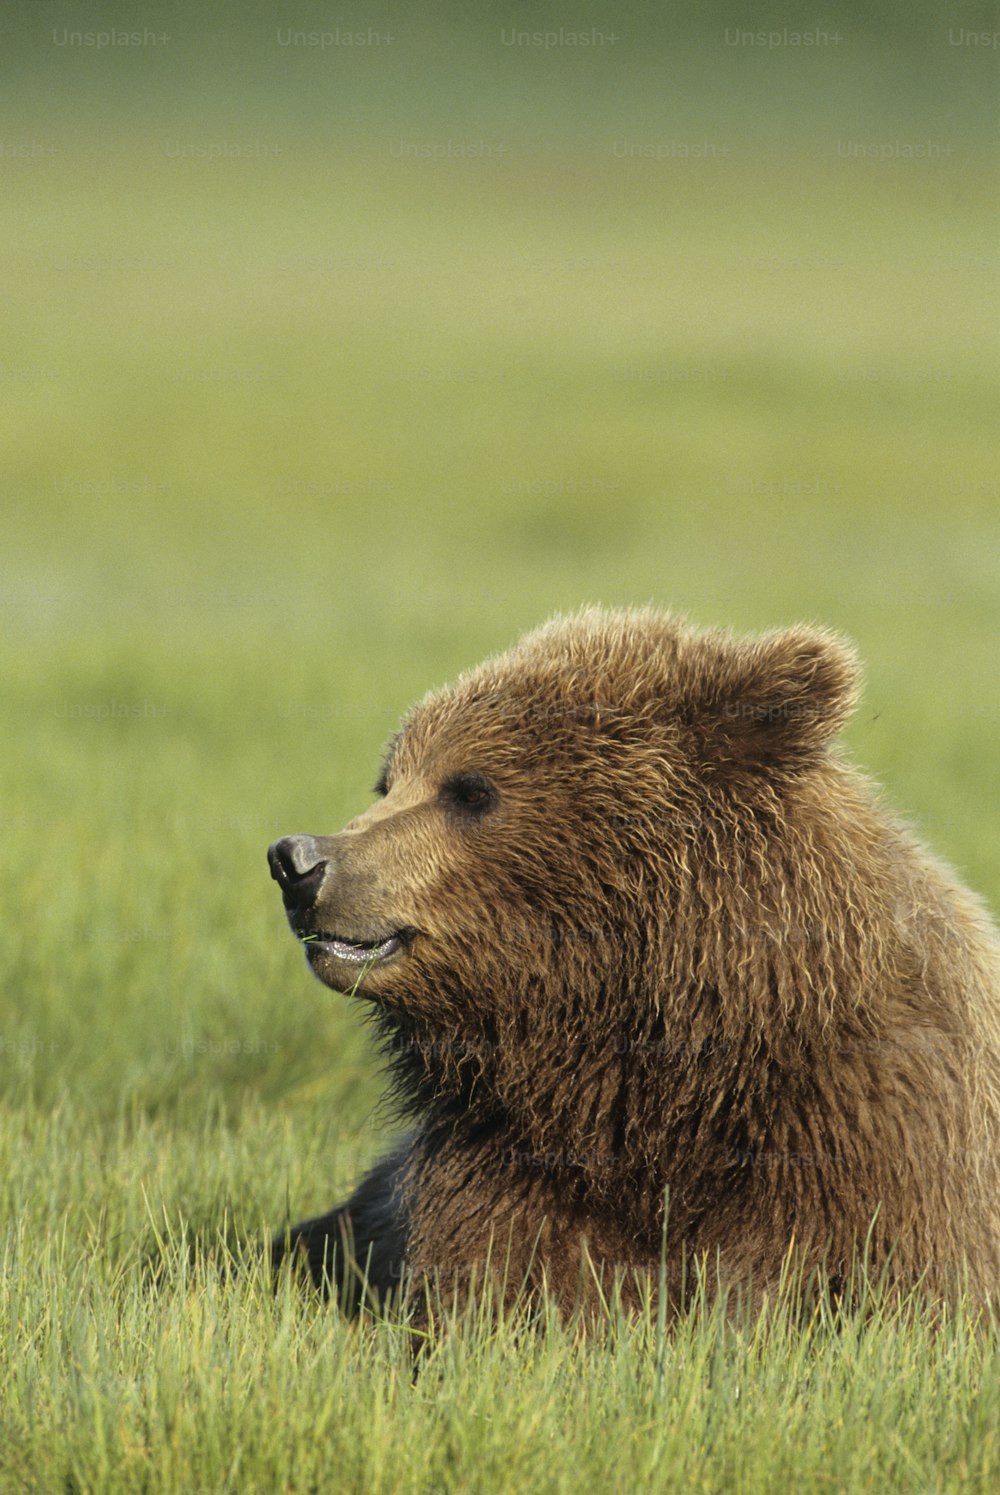 a brown bear sitting in a grassy field